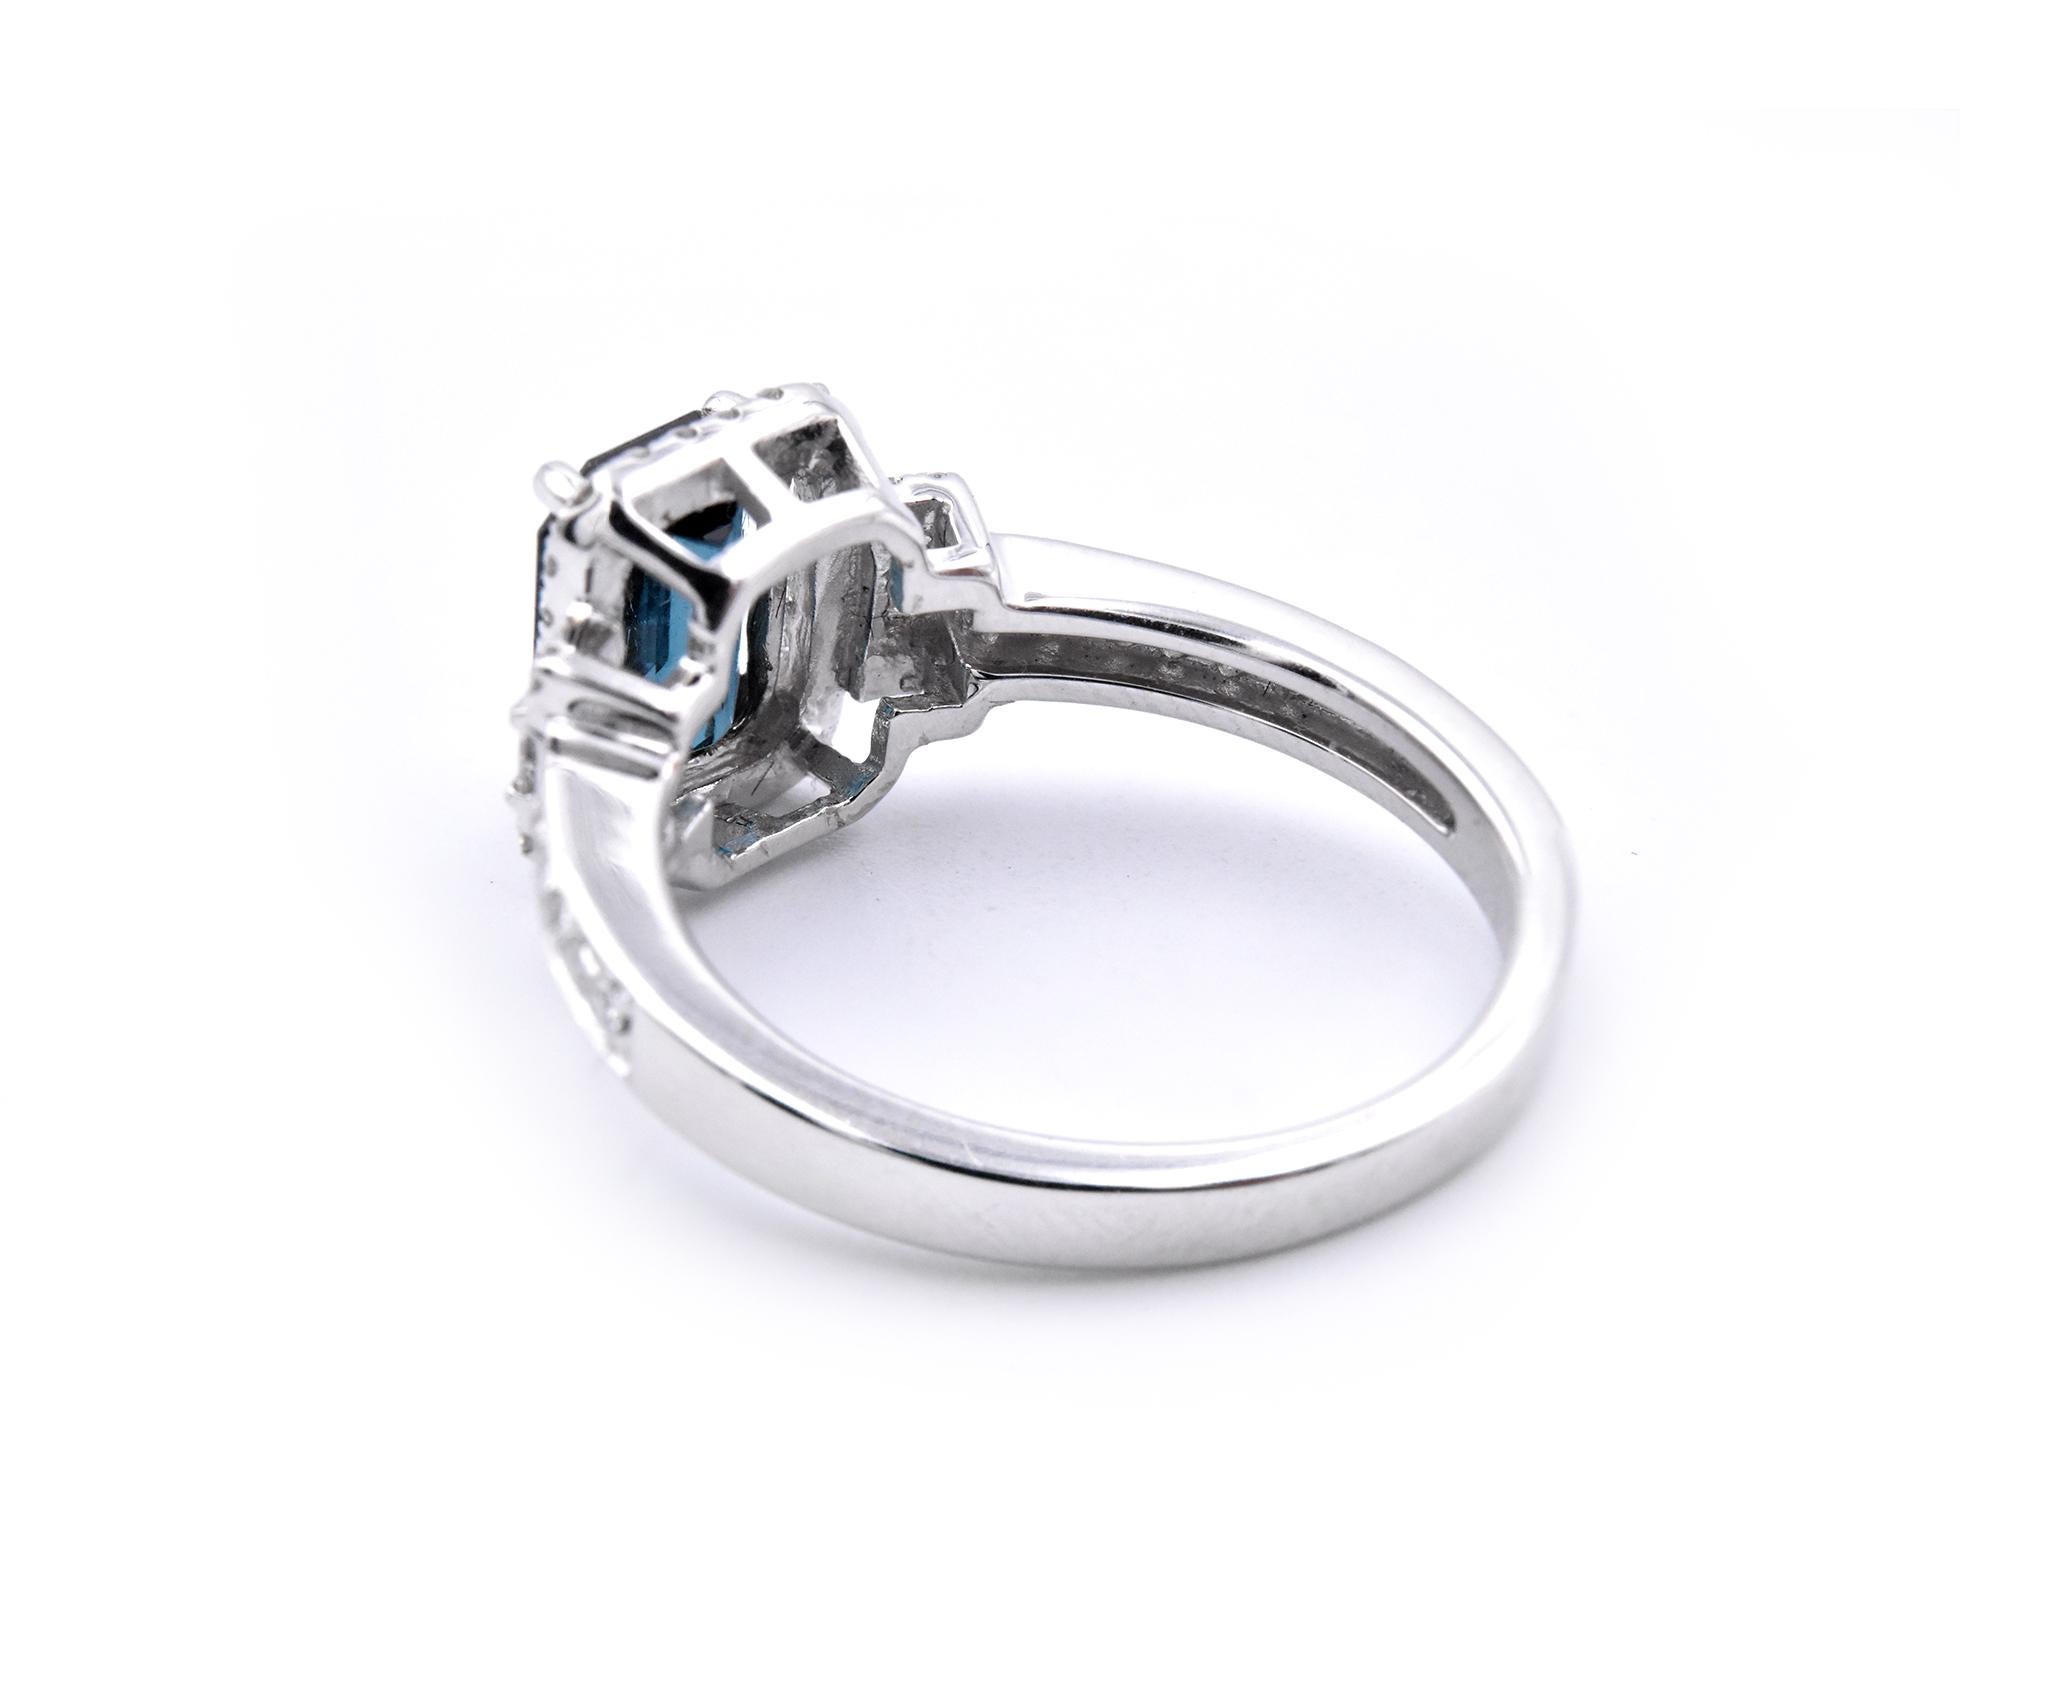 blue tourmaline engagement ring